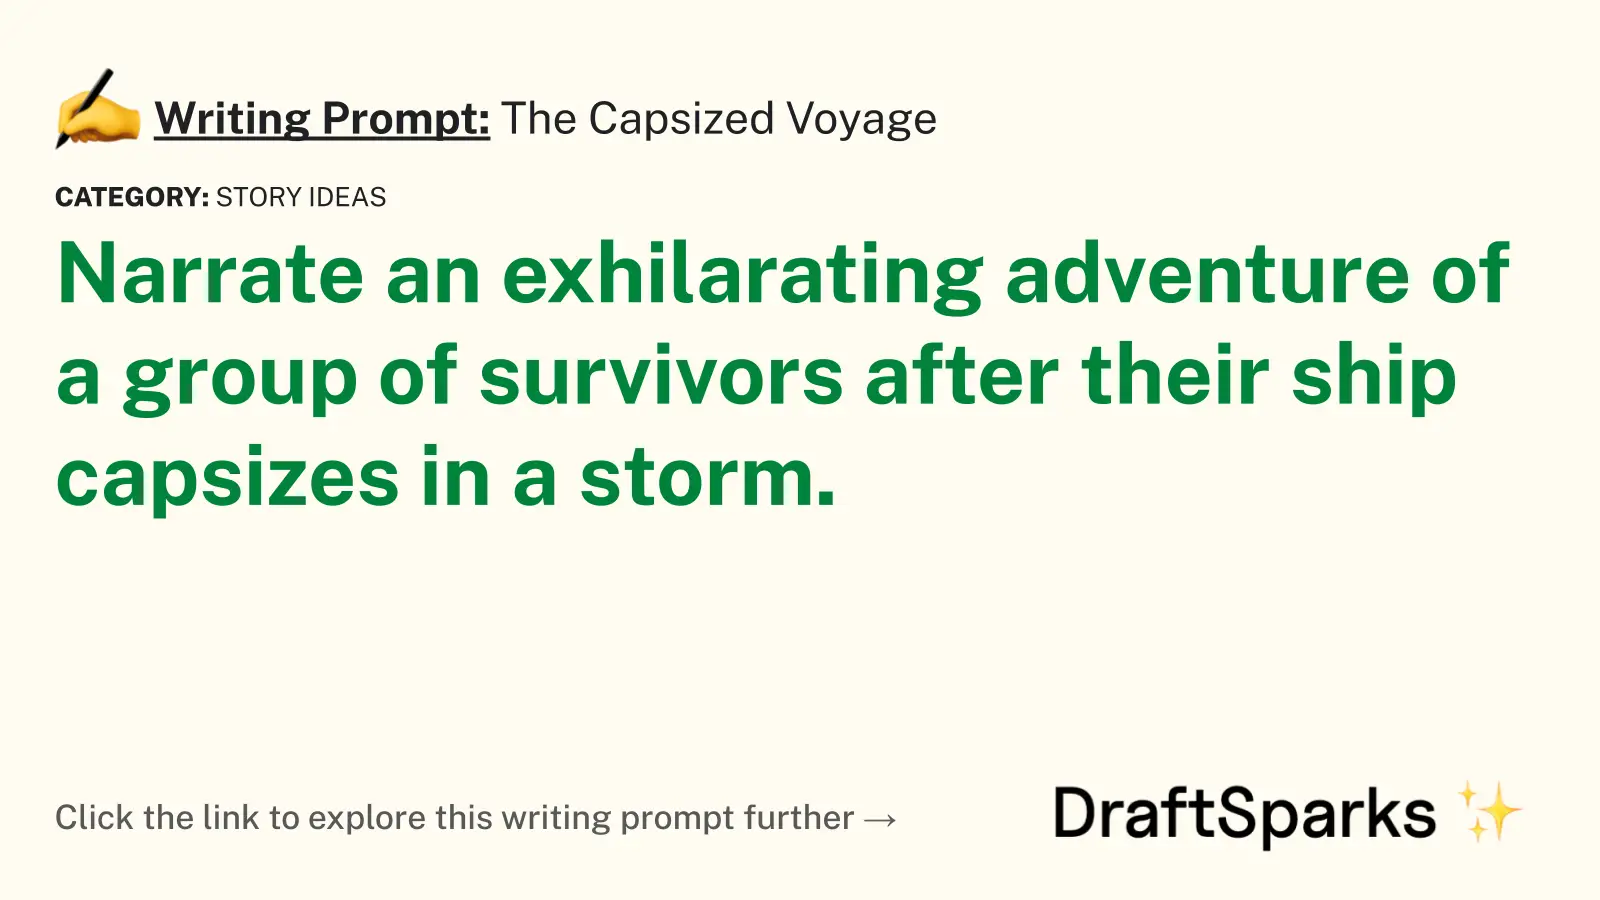 The Capsized Voyage